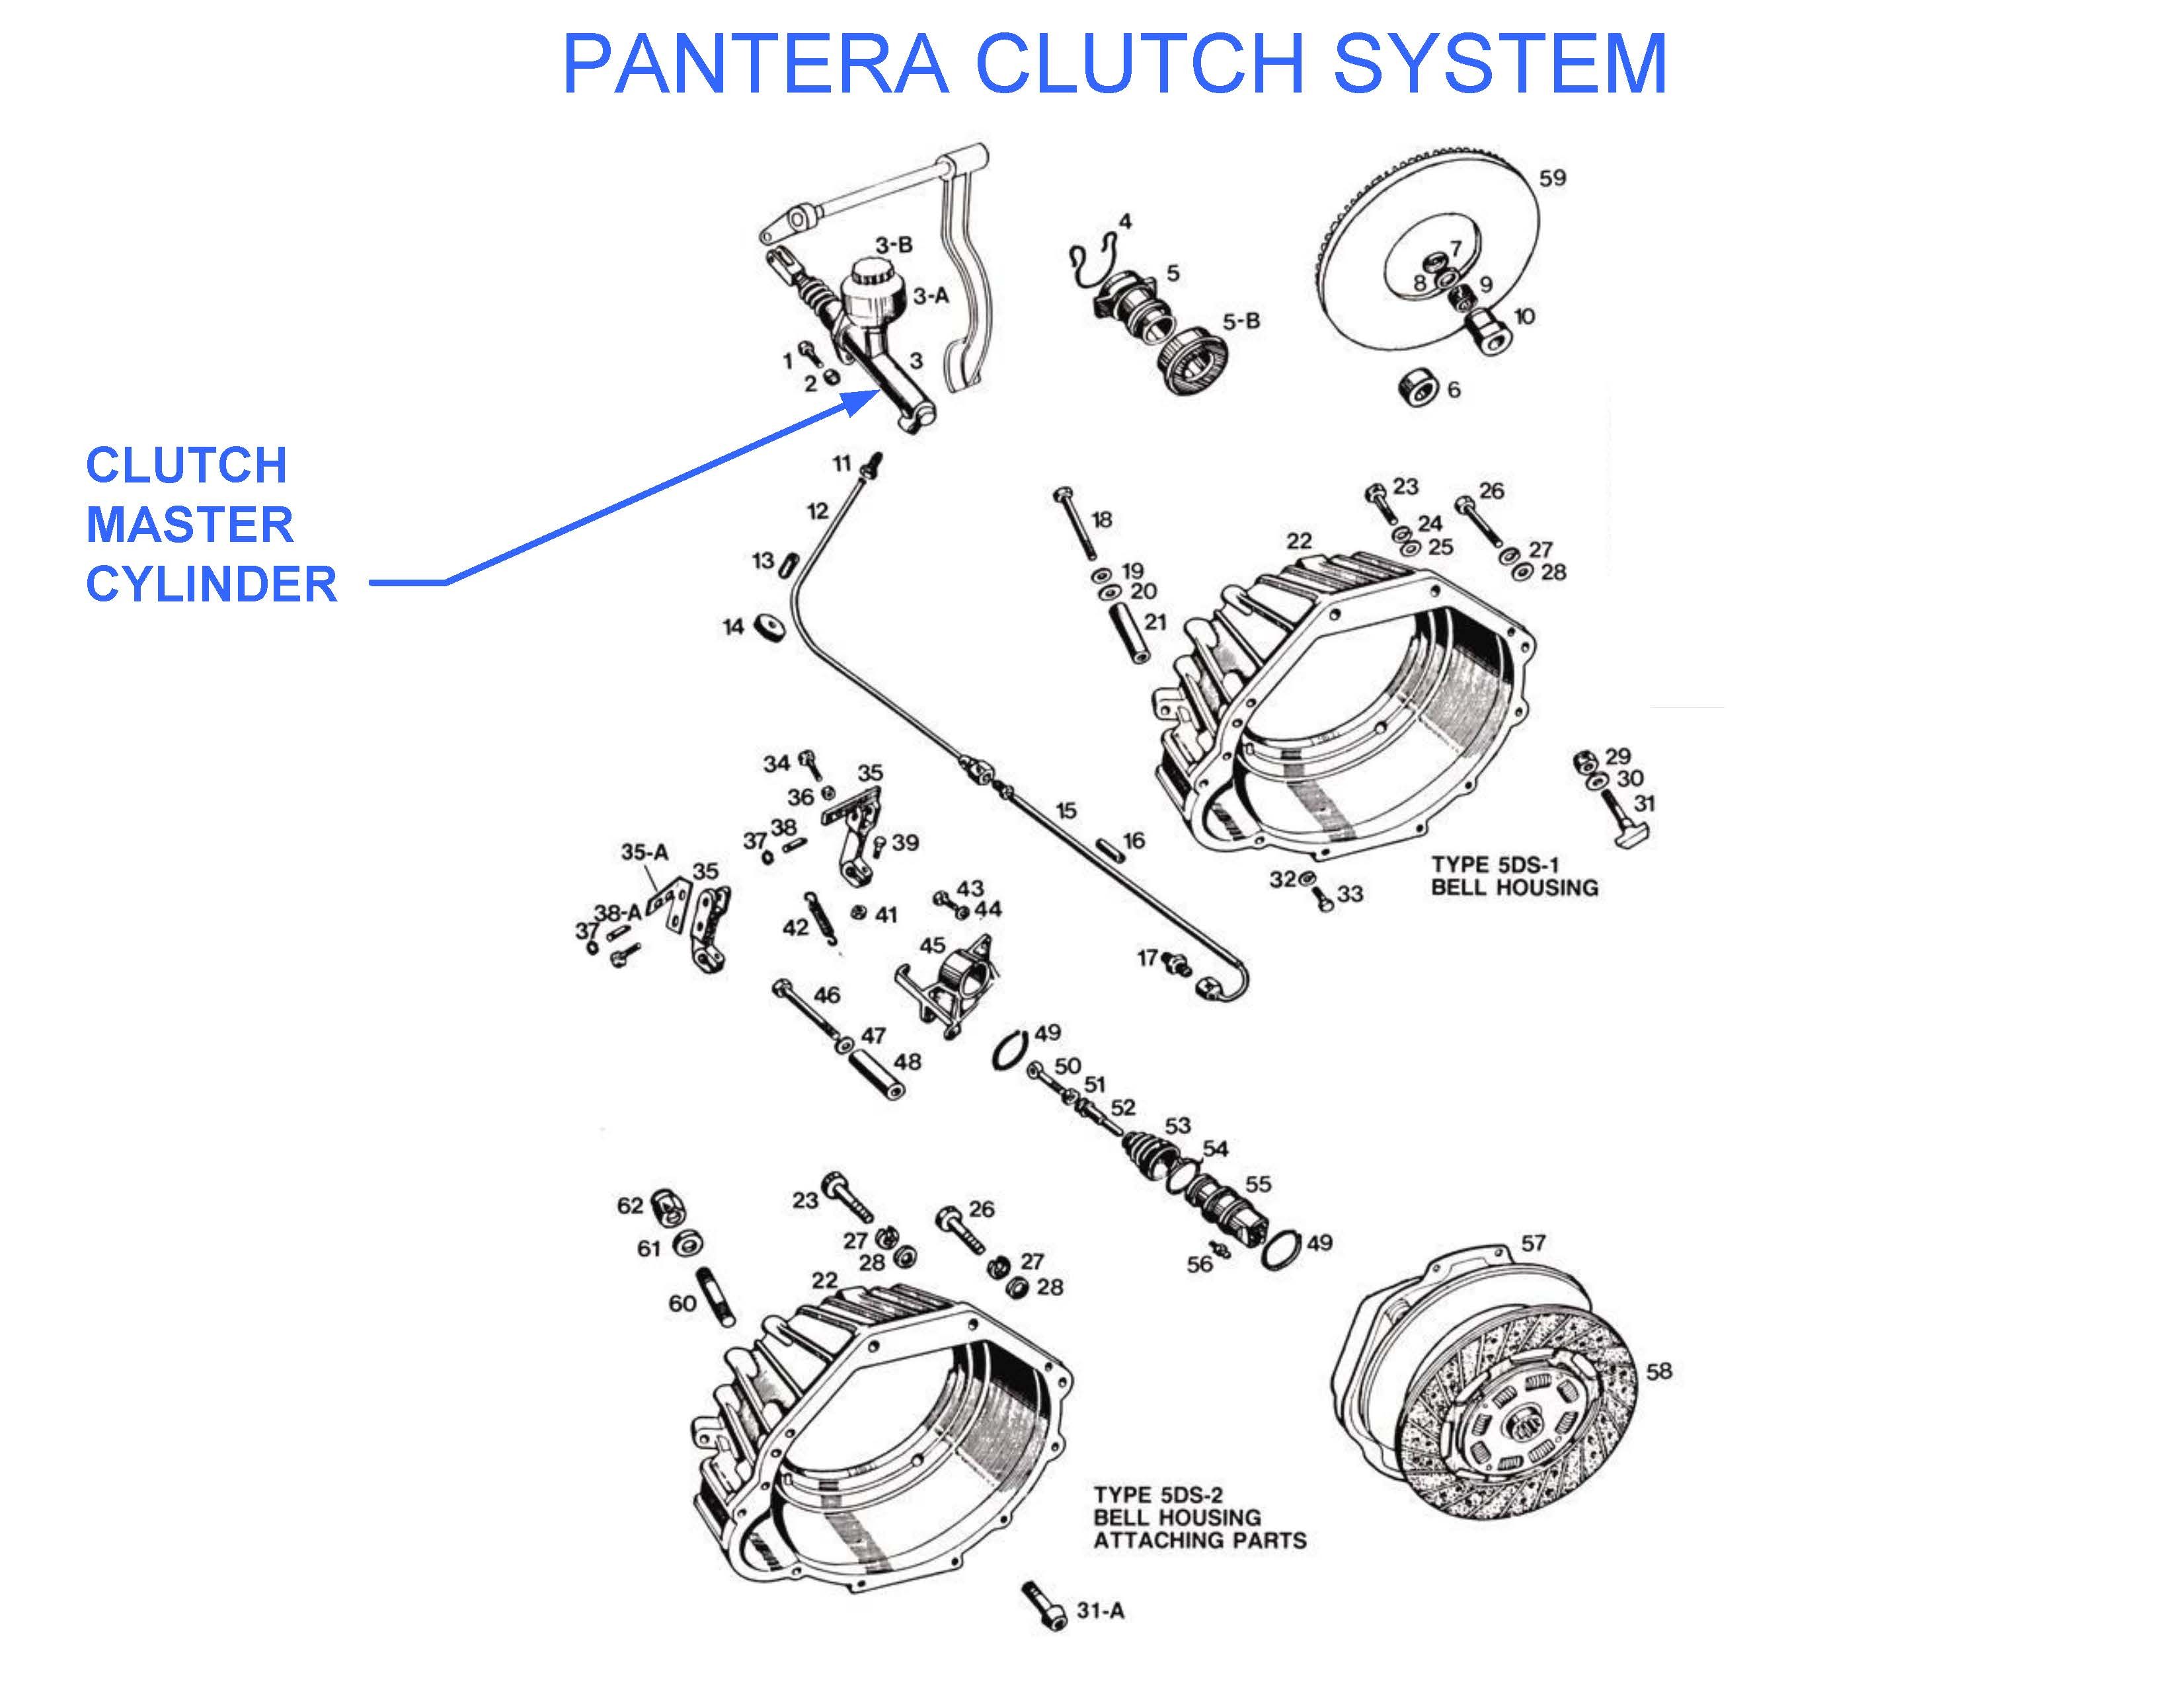 Clutch Master Cylinder Diagram John Maloney S Clutch Master Cylinder Replacement Of Clutch Master Cylinder Diagram